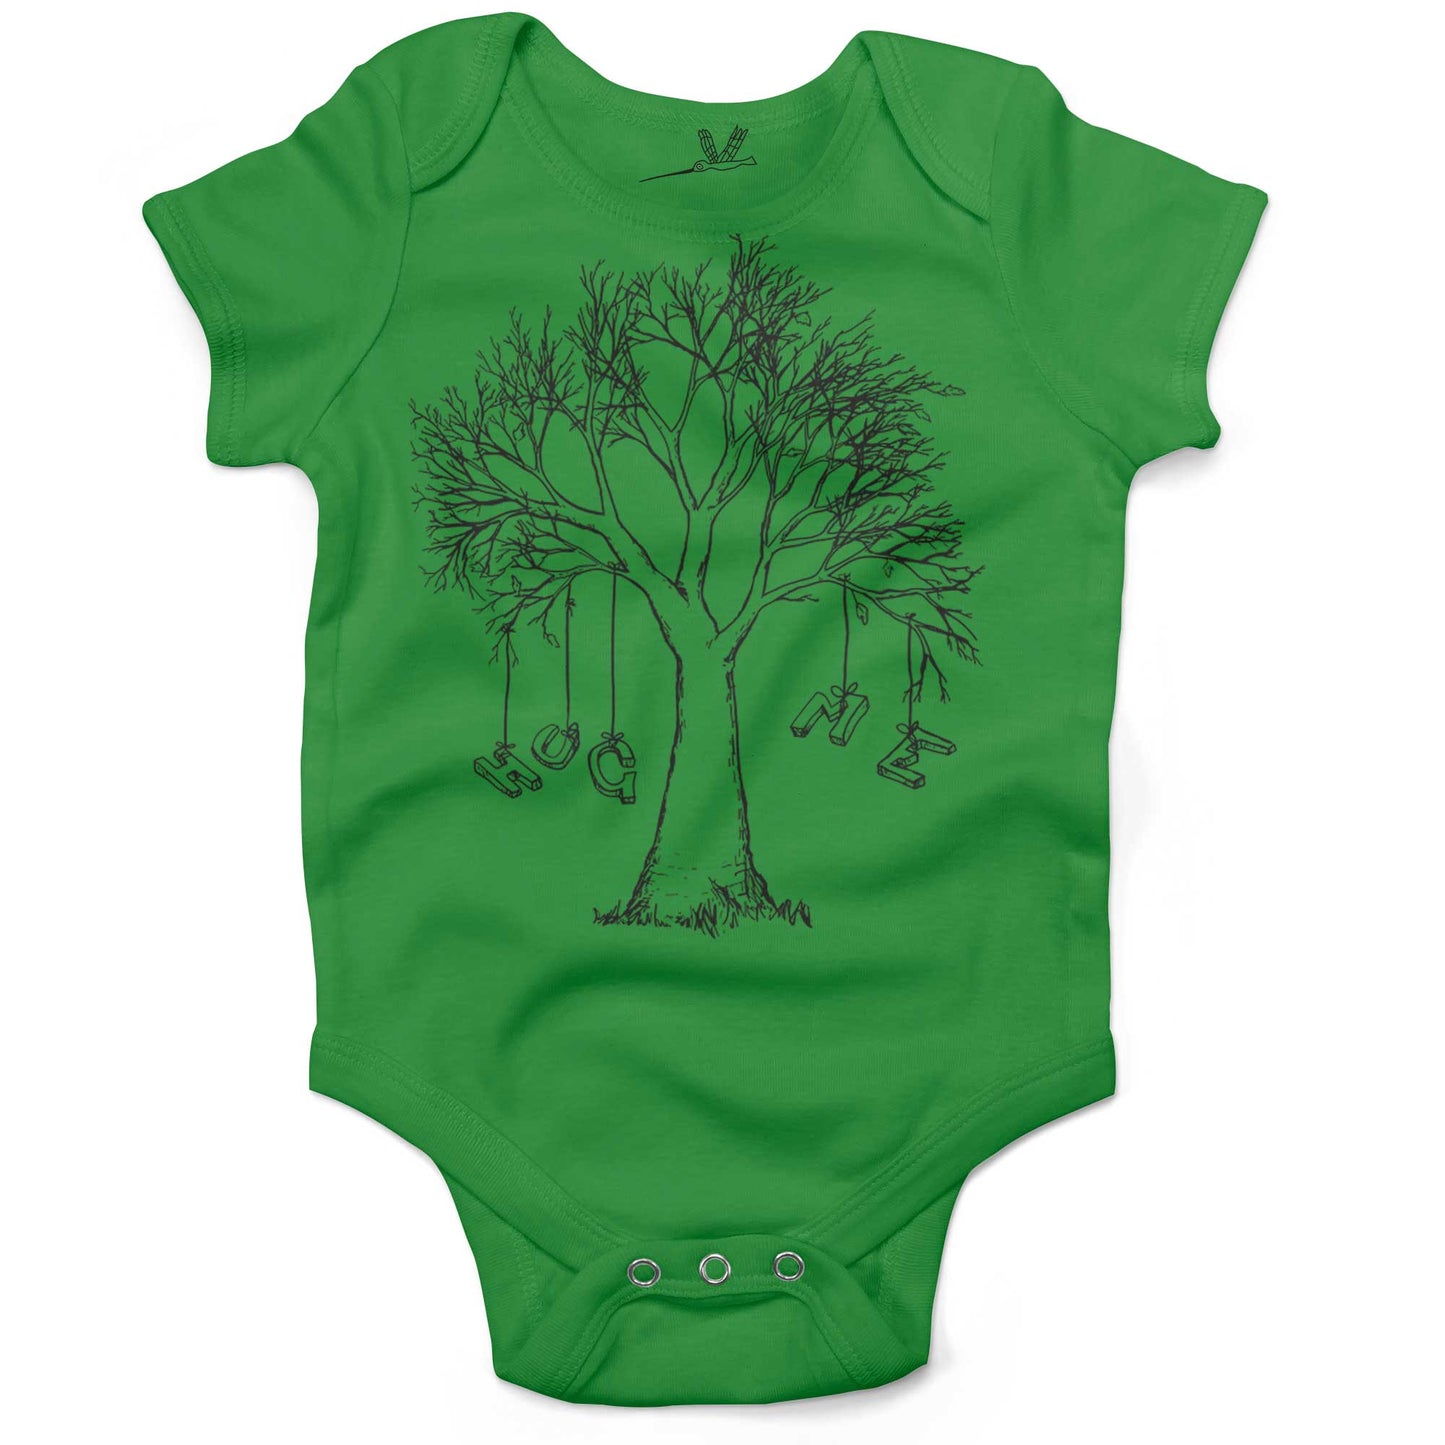 Hug A Tree Infant Bodysuit or Raglan Tee-Grass Green-3-6 months